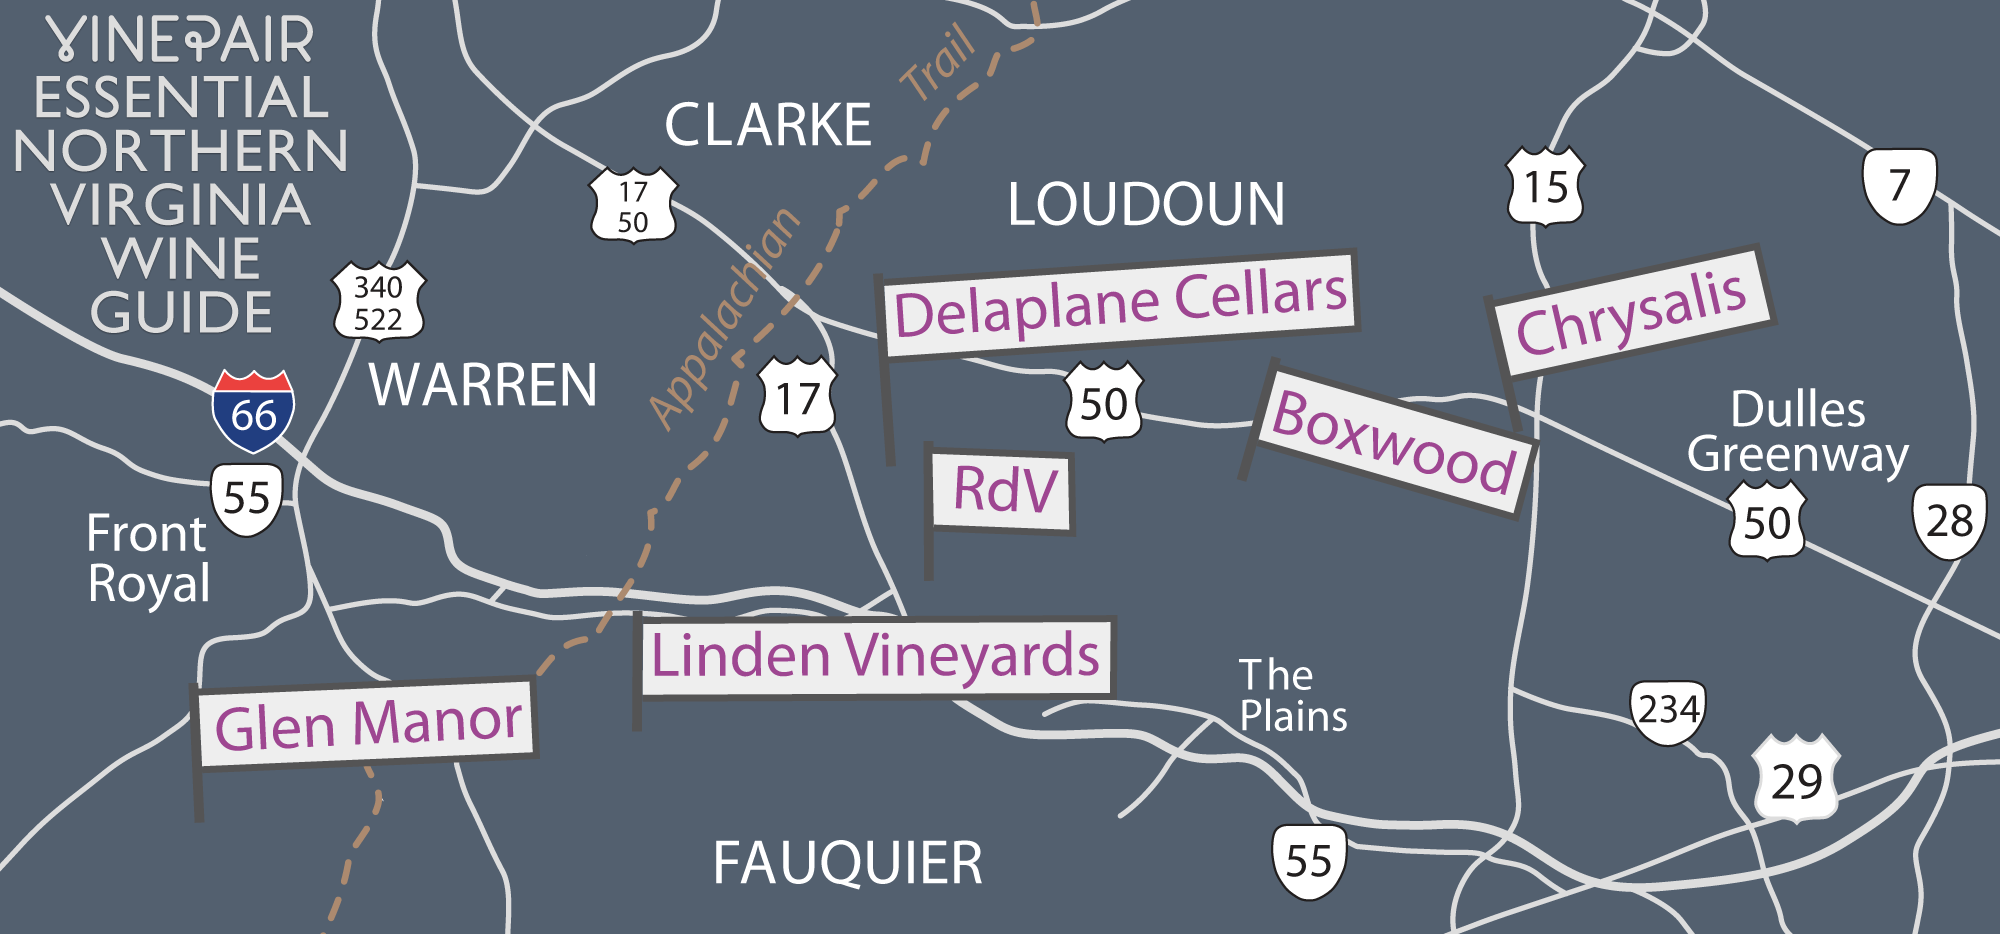 Map Of Northern Virginia Wineries